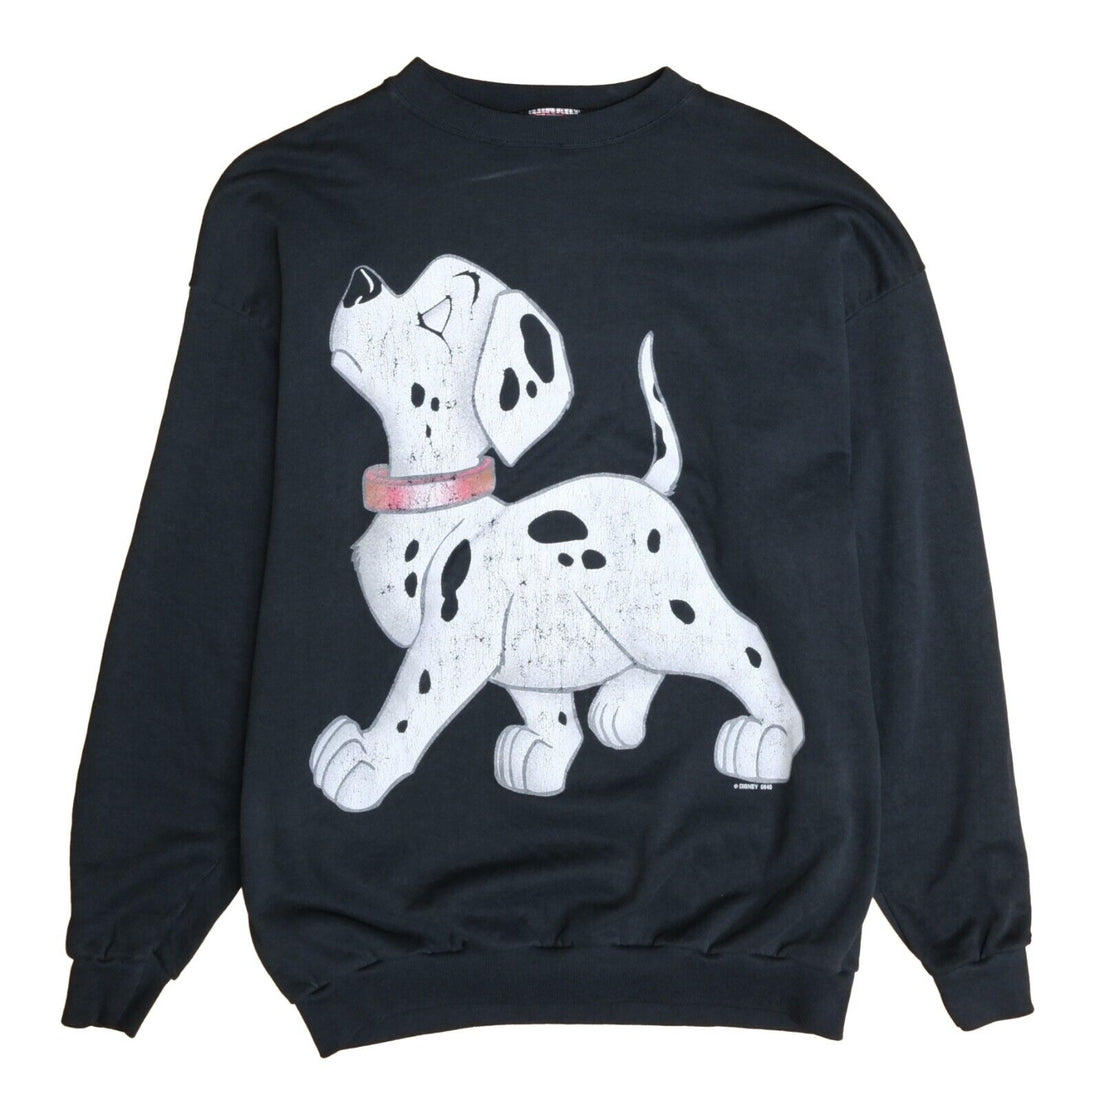 Vintage 101 Dalmatians Disney Sweatshirt Crewneck Size XL Movie Promo